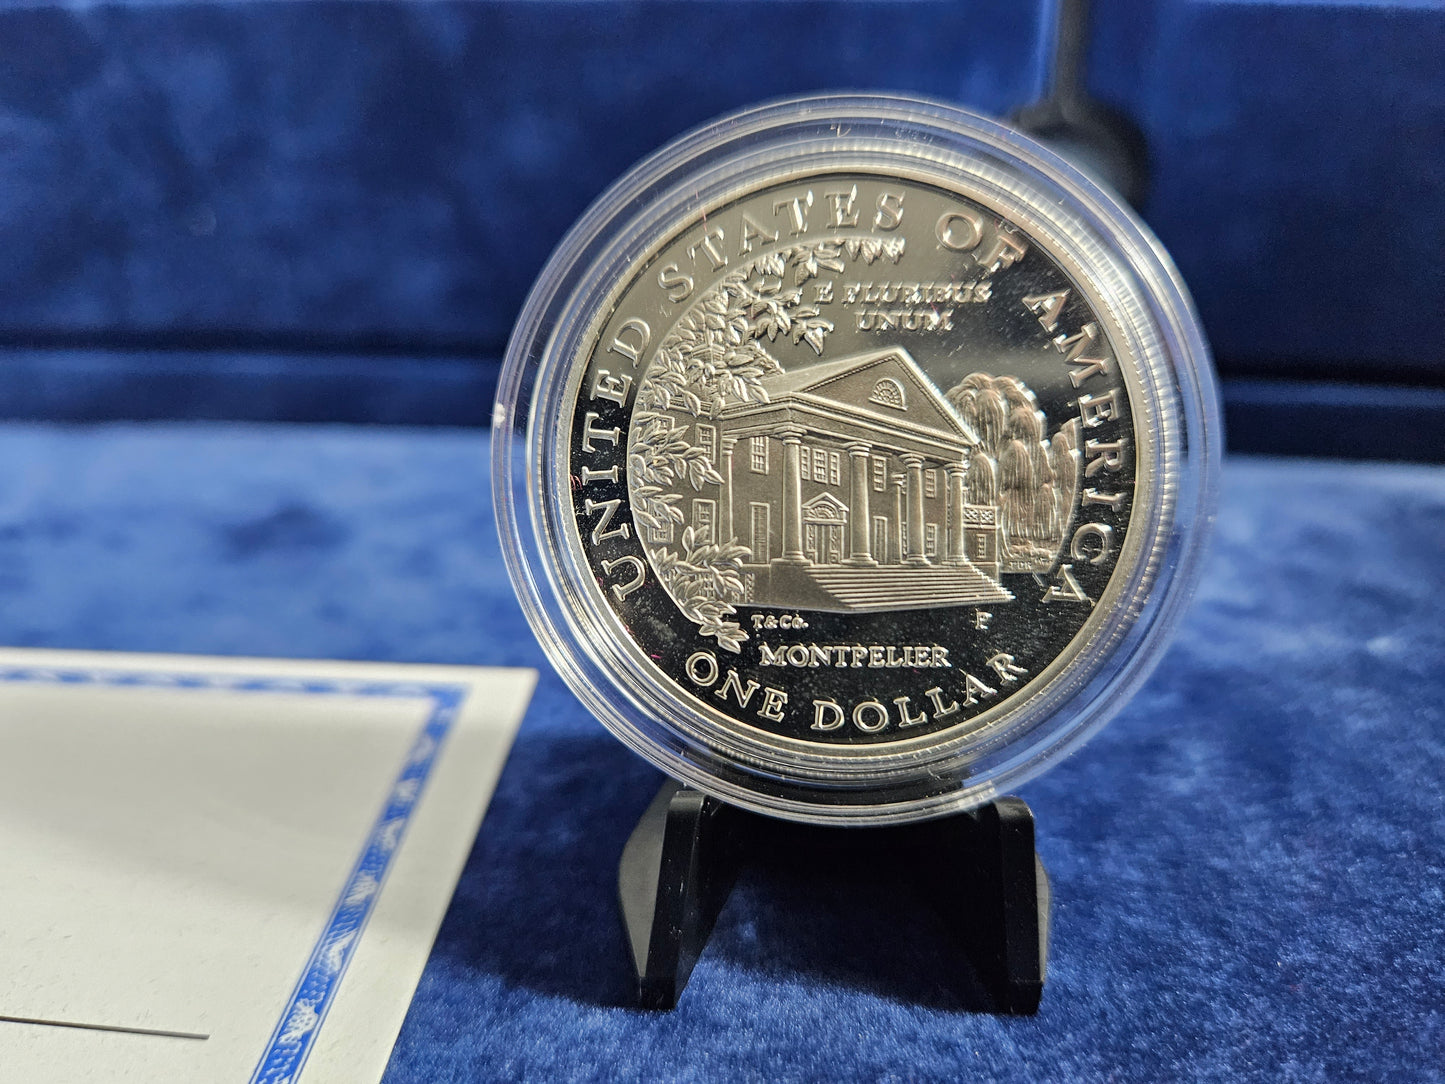 1999 Dolley Madison Silver Dollar 2 Coin Set US Mint Commemorative PR UNC $1 OGP